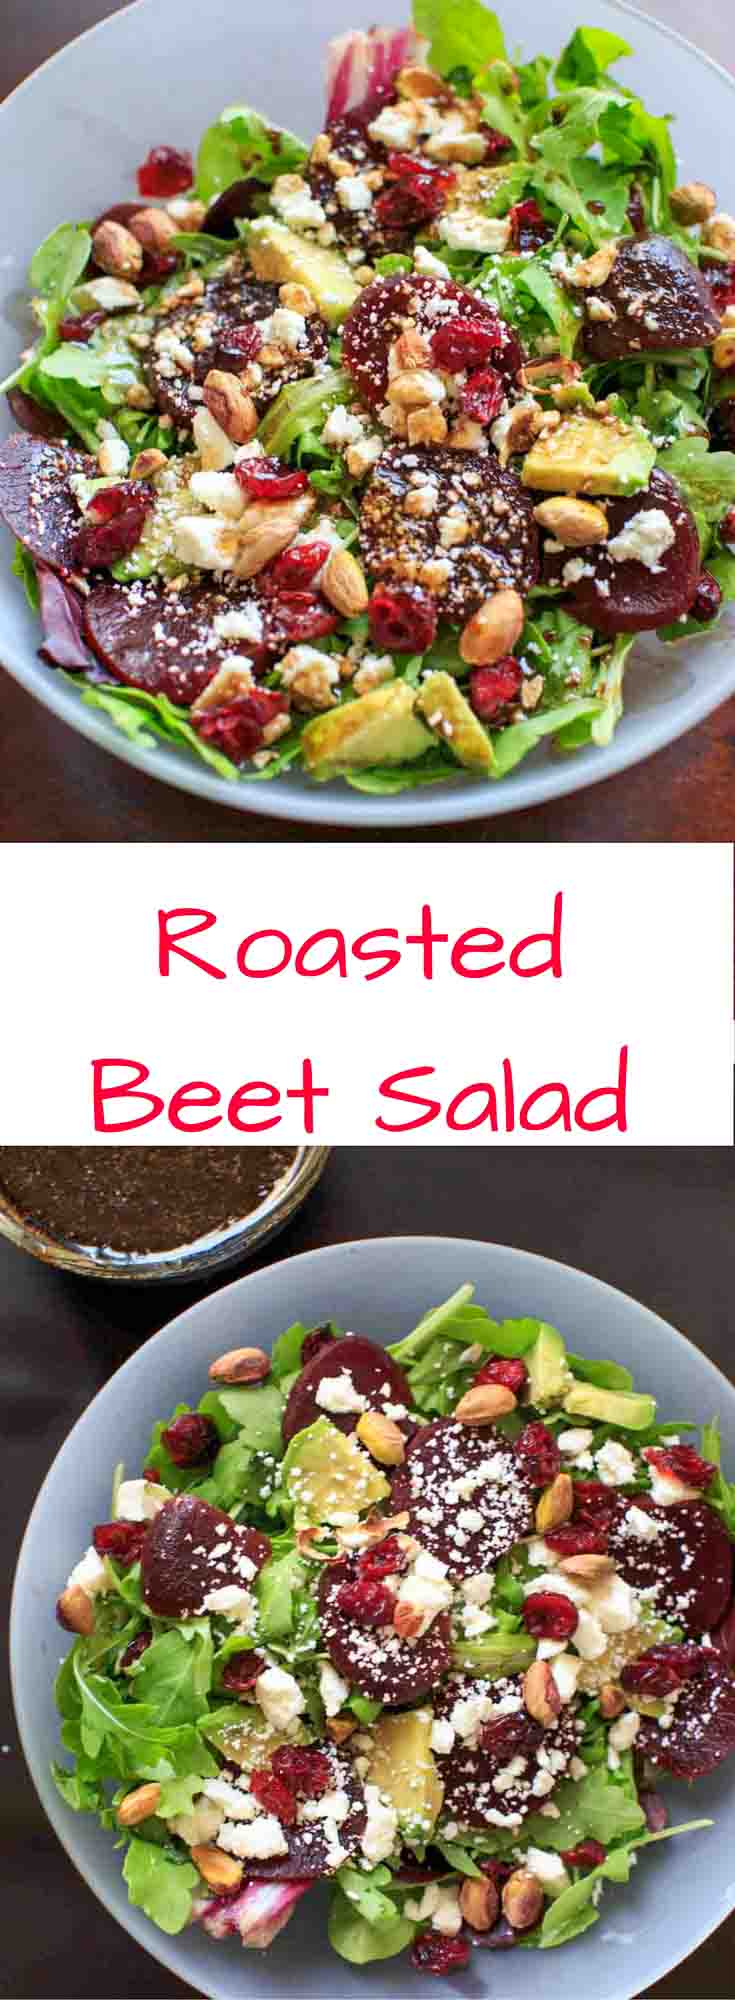 Roasted Beet Salad with Honey Balsamic Vinaigrette